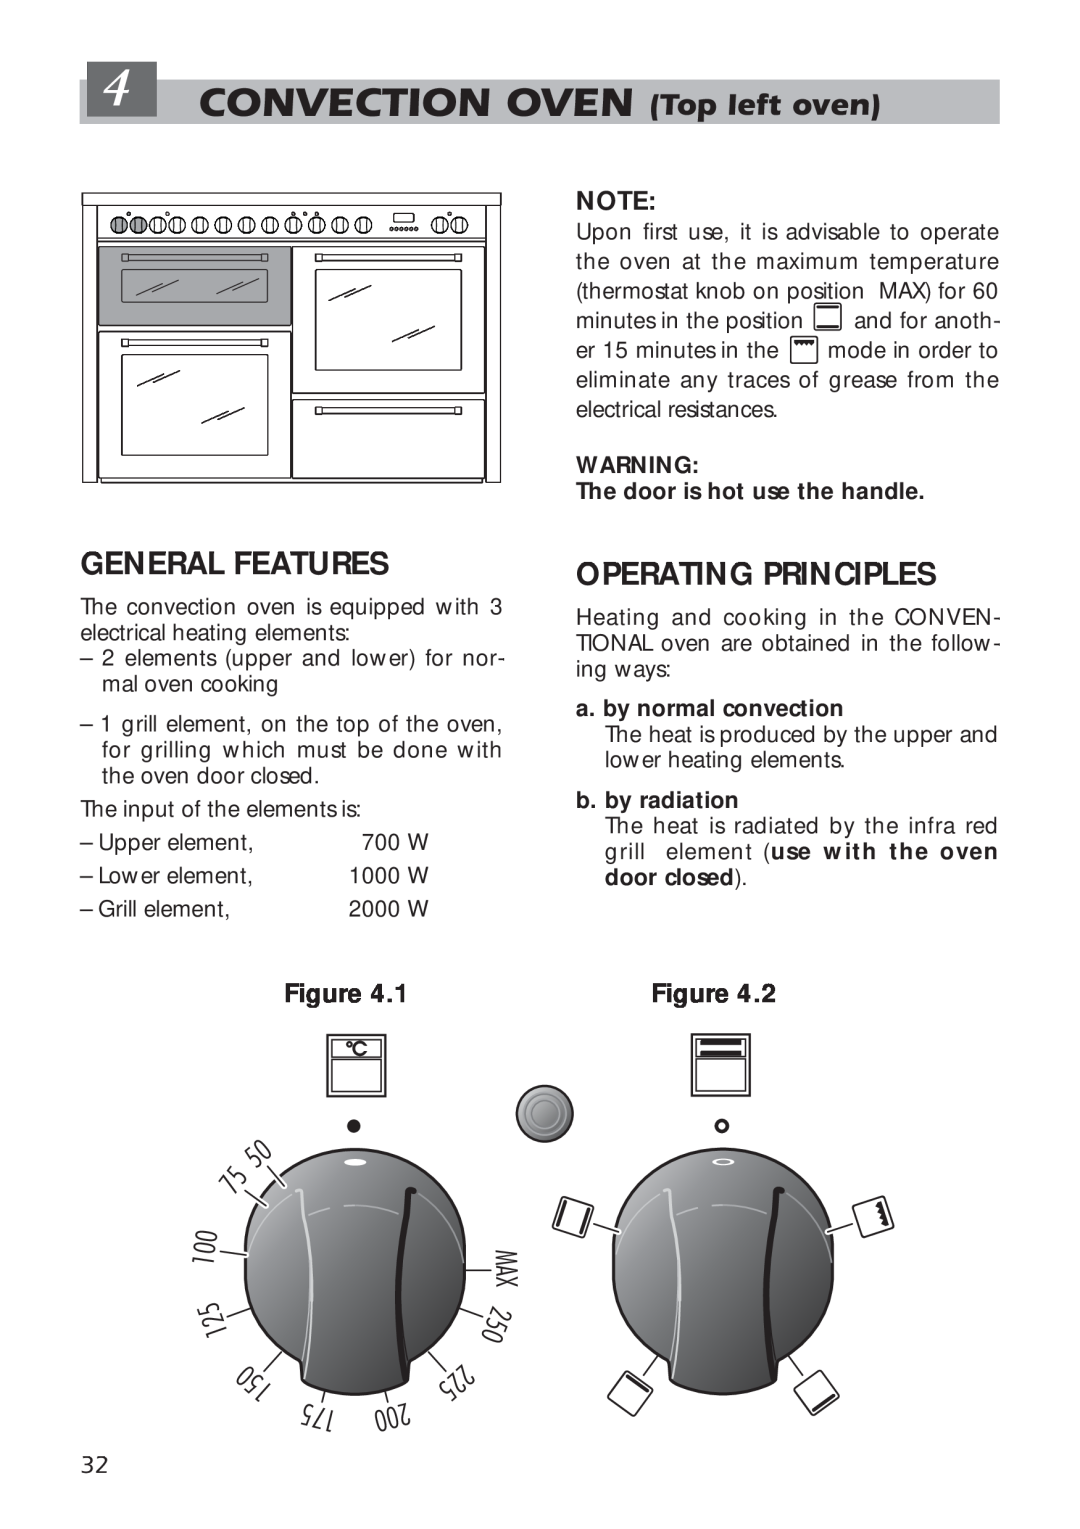 DeLonghi A 1346 G manual CONVECTION OVEN Top left oven, General Features, Operating Principles 